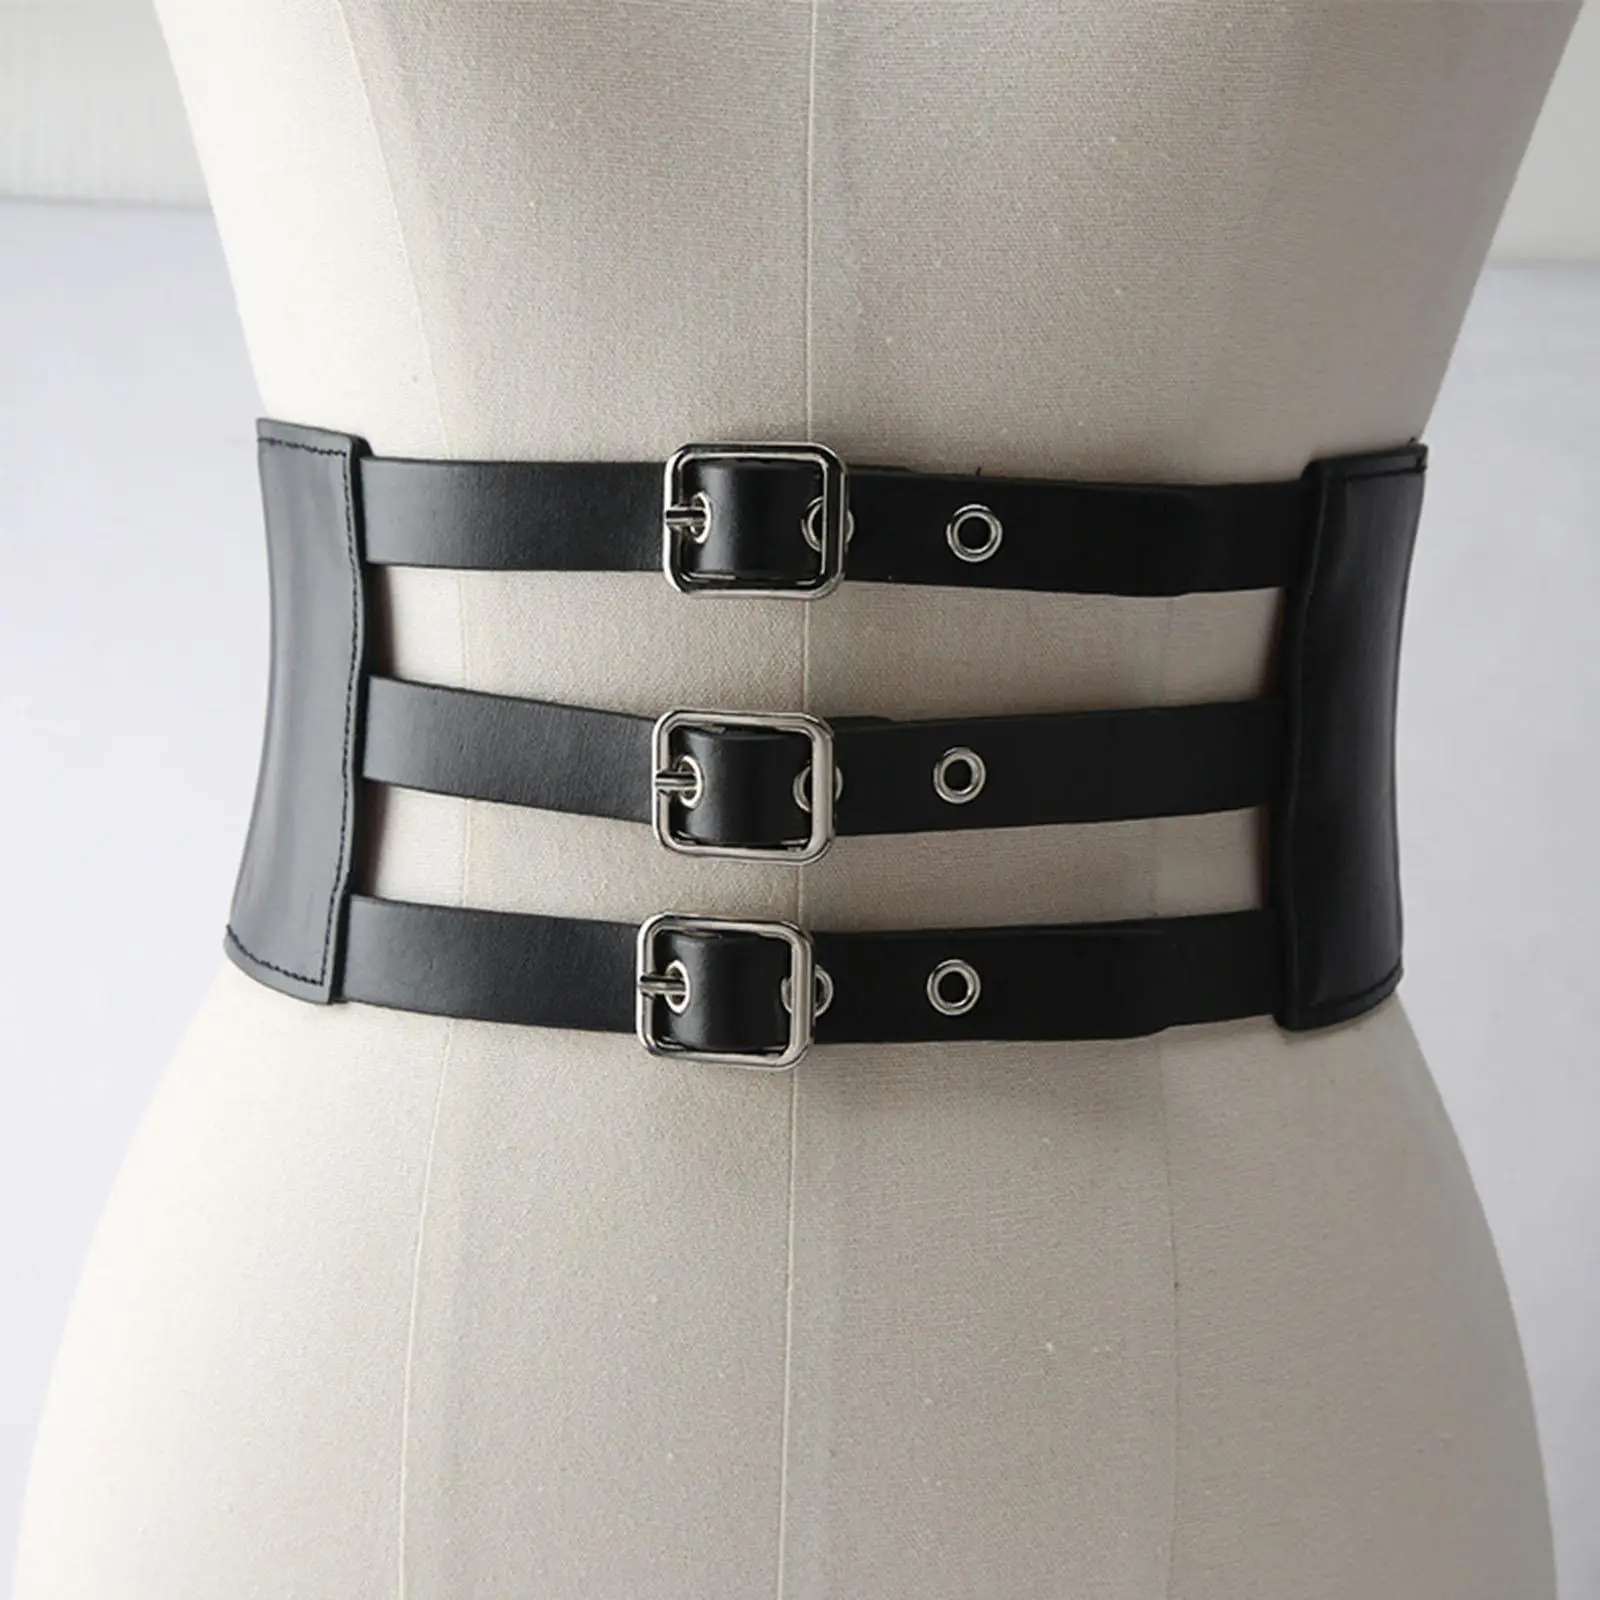 Womens Elastic Waist Belt Vintage Style Stretch Decorative Pin Buckle Belt Adjustable Ladies Girls for Club Jeans Dancing